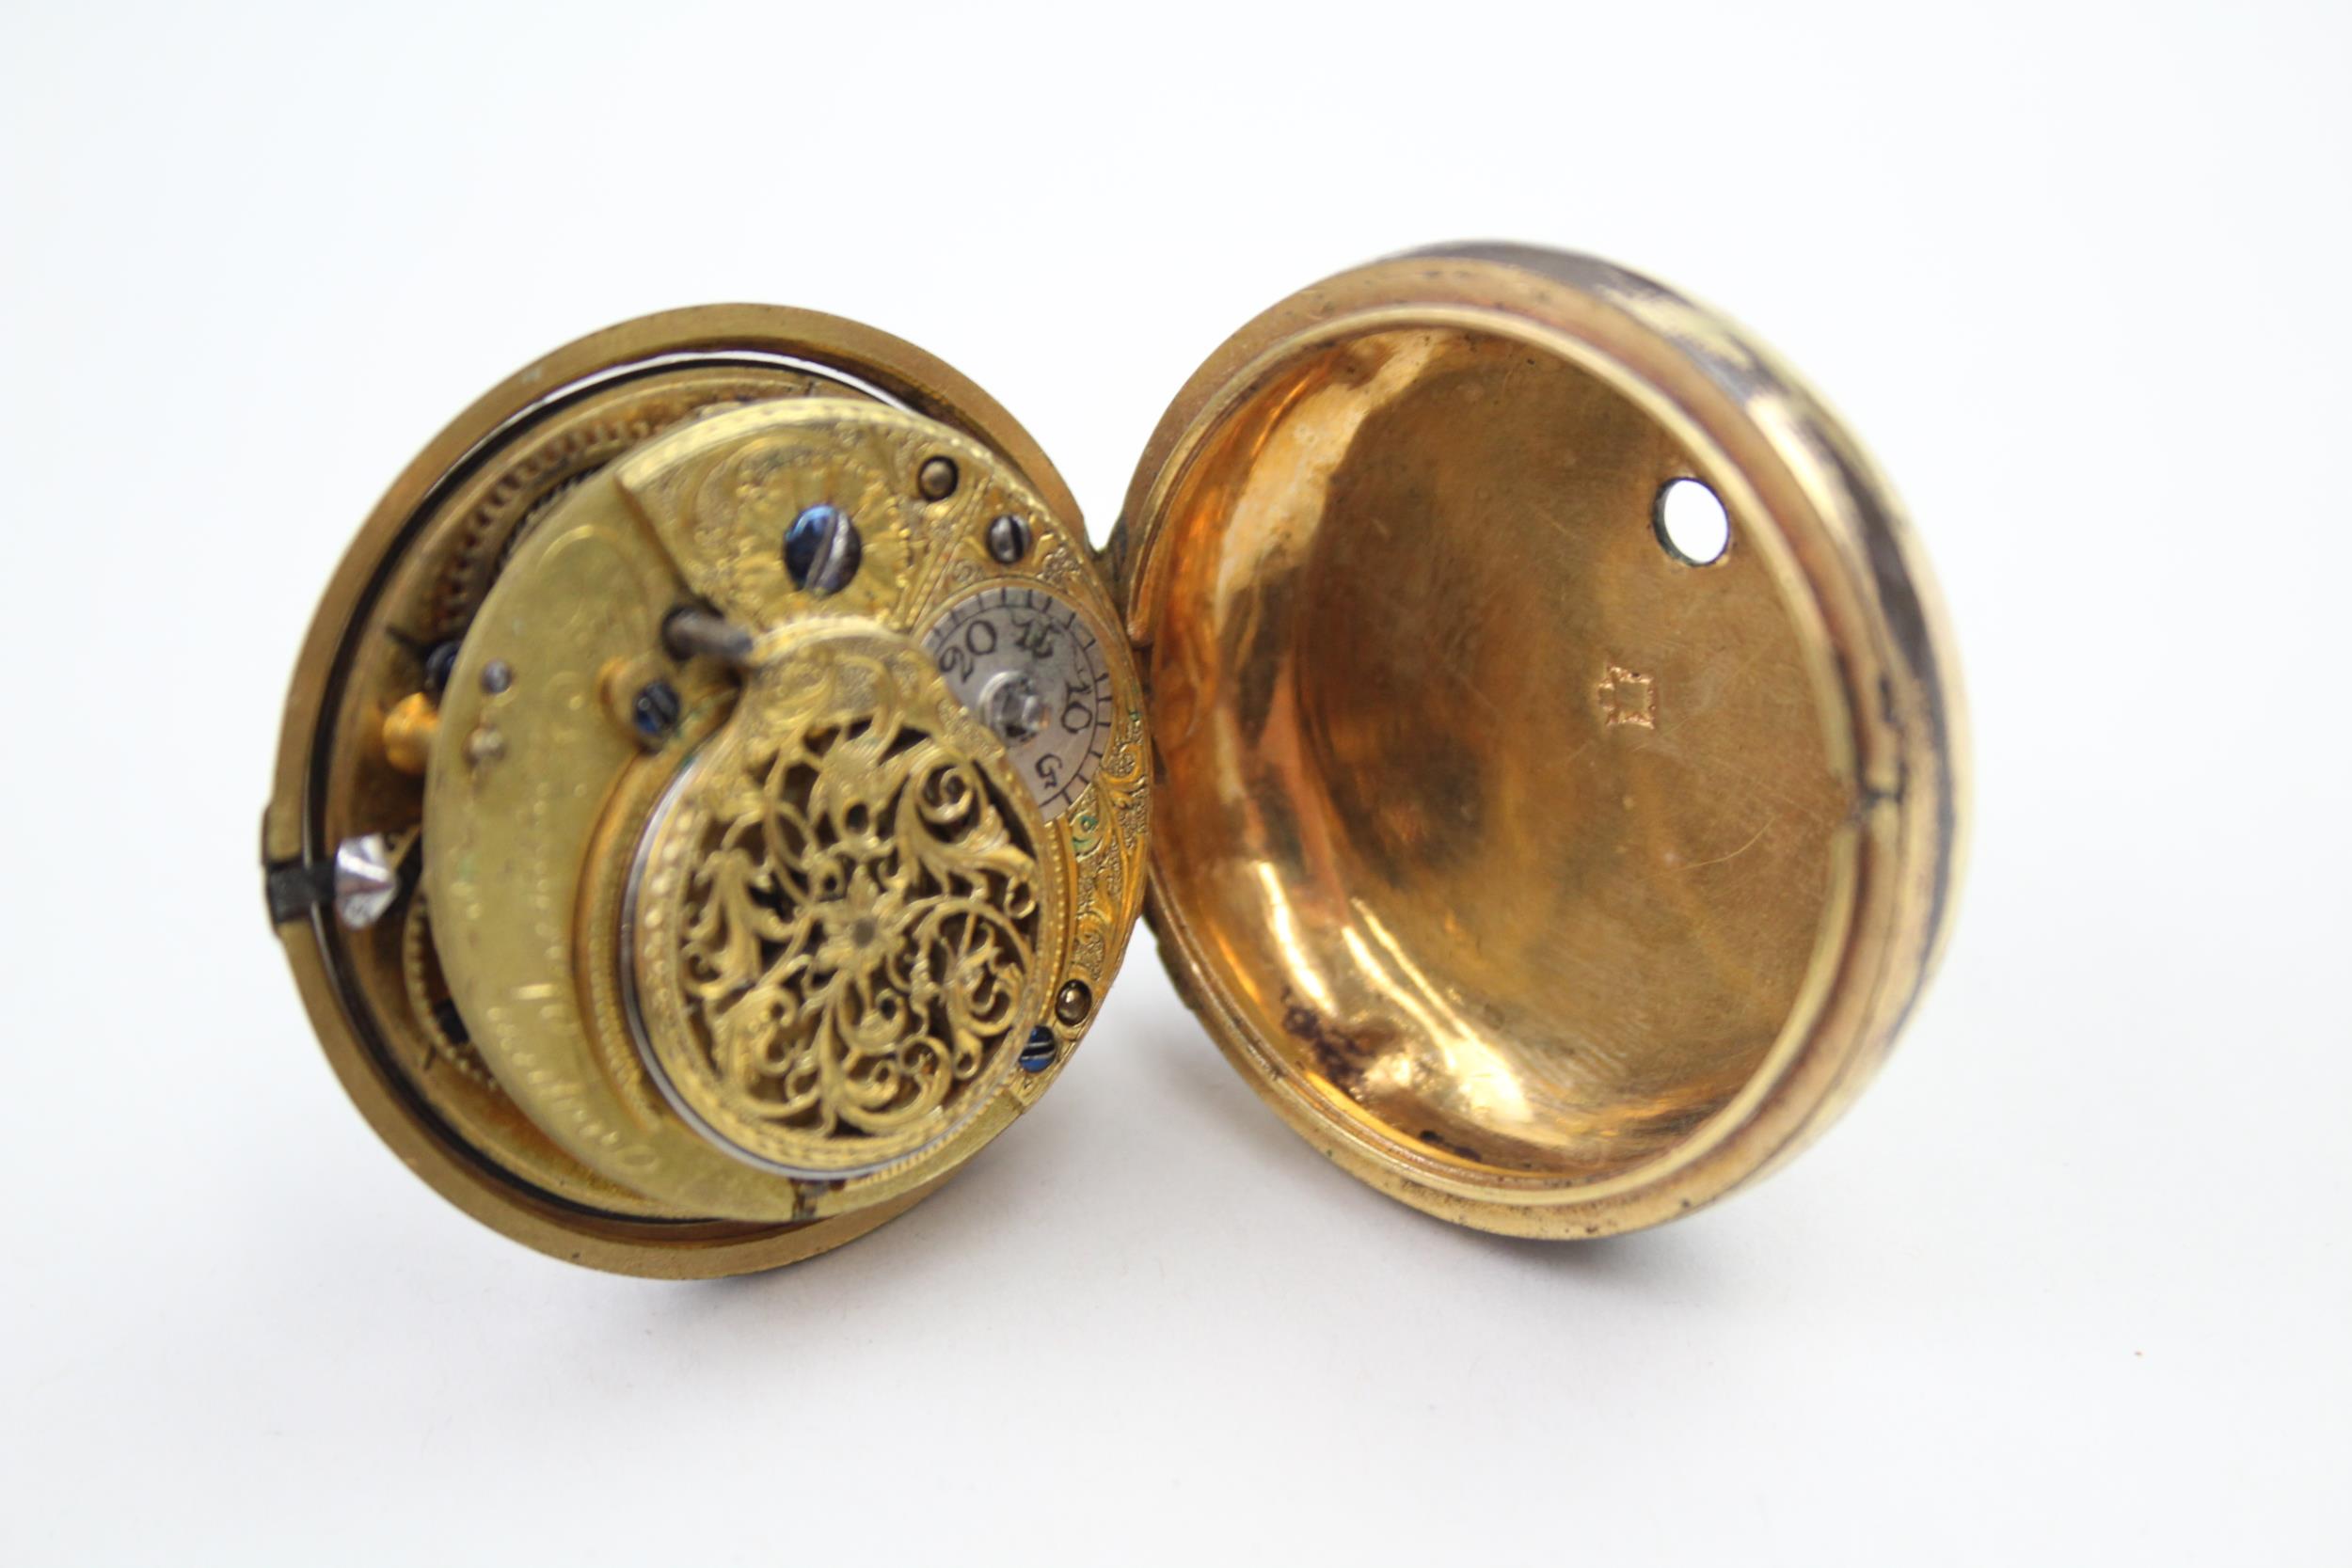 Antique Fusee Pair Cased POCKET WATCH Key Wind WORKING - Antique Fusee Pair Cased Pocket Watch - Image 6 of 11